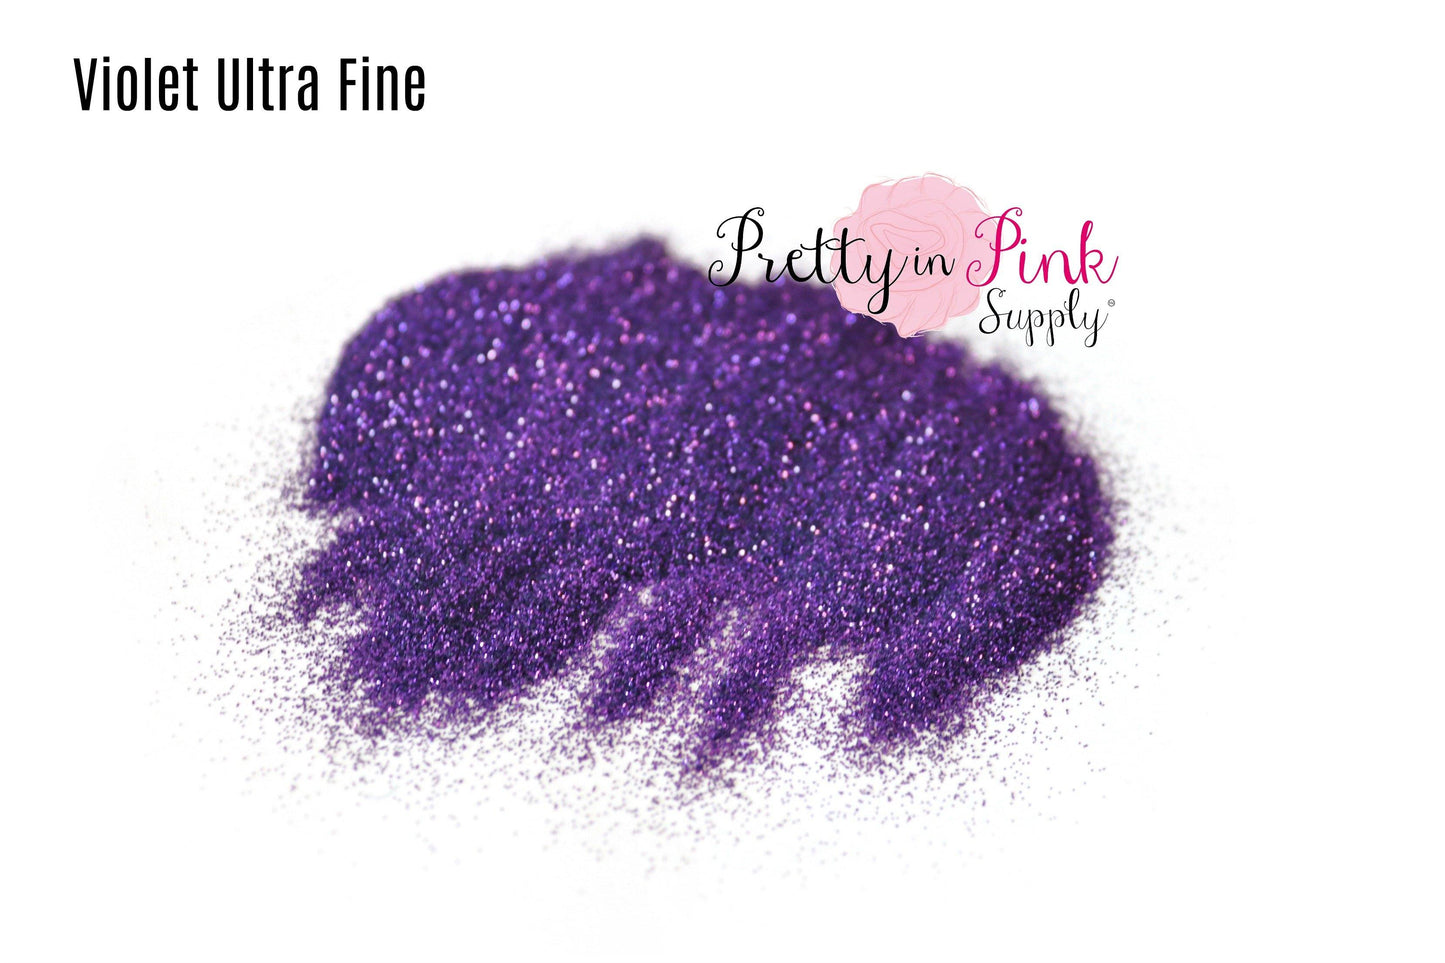 Violet Ultra Fine Glitter - Pretty in Pink Supply